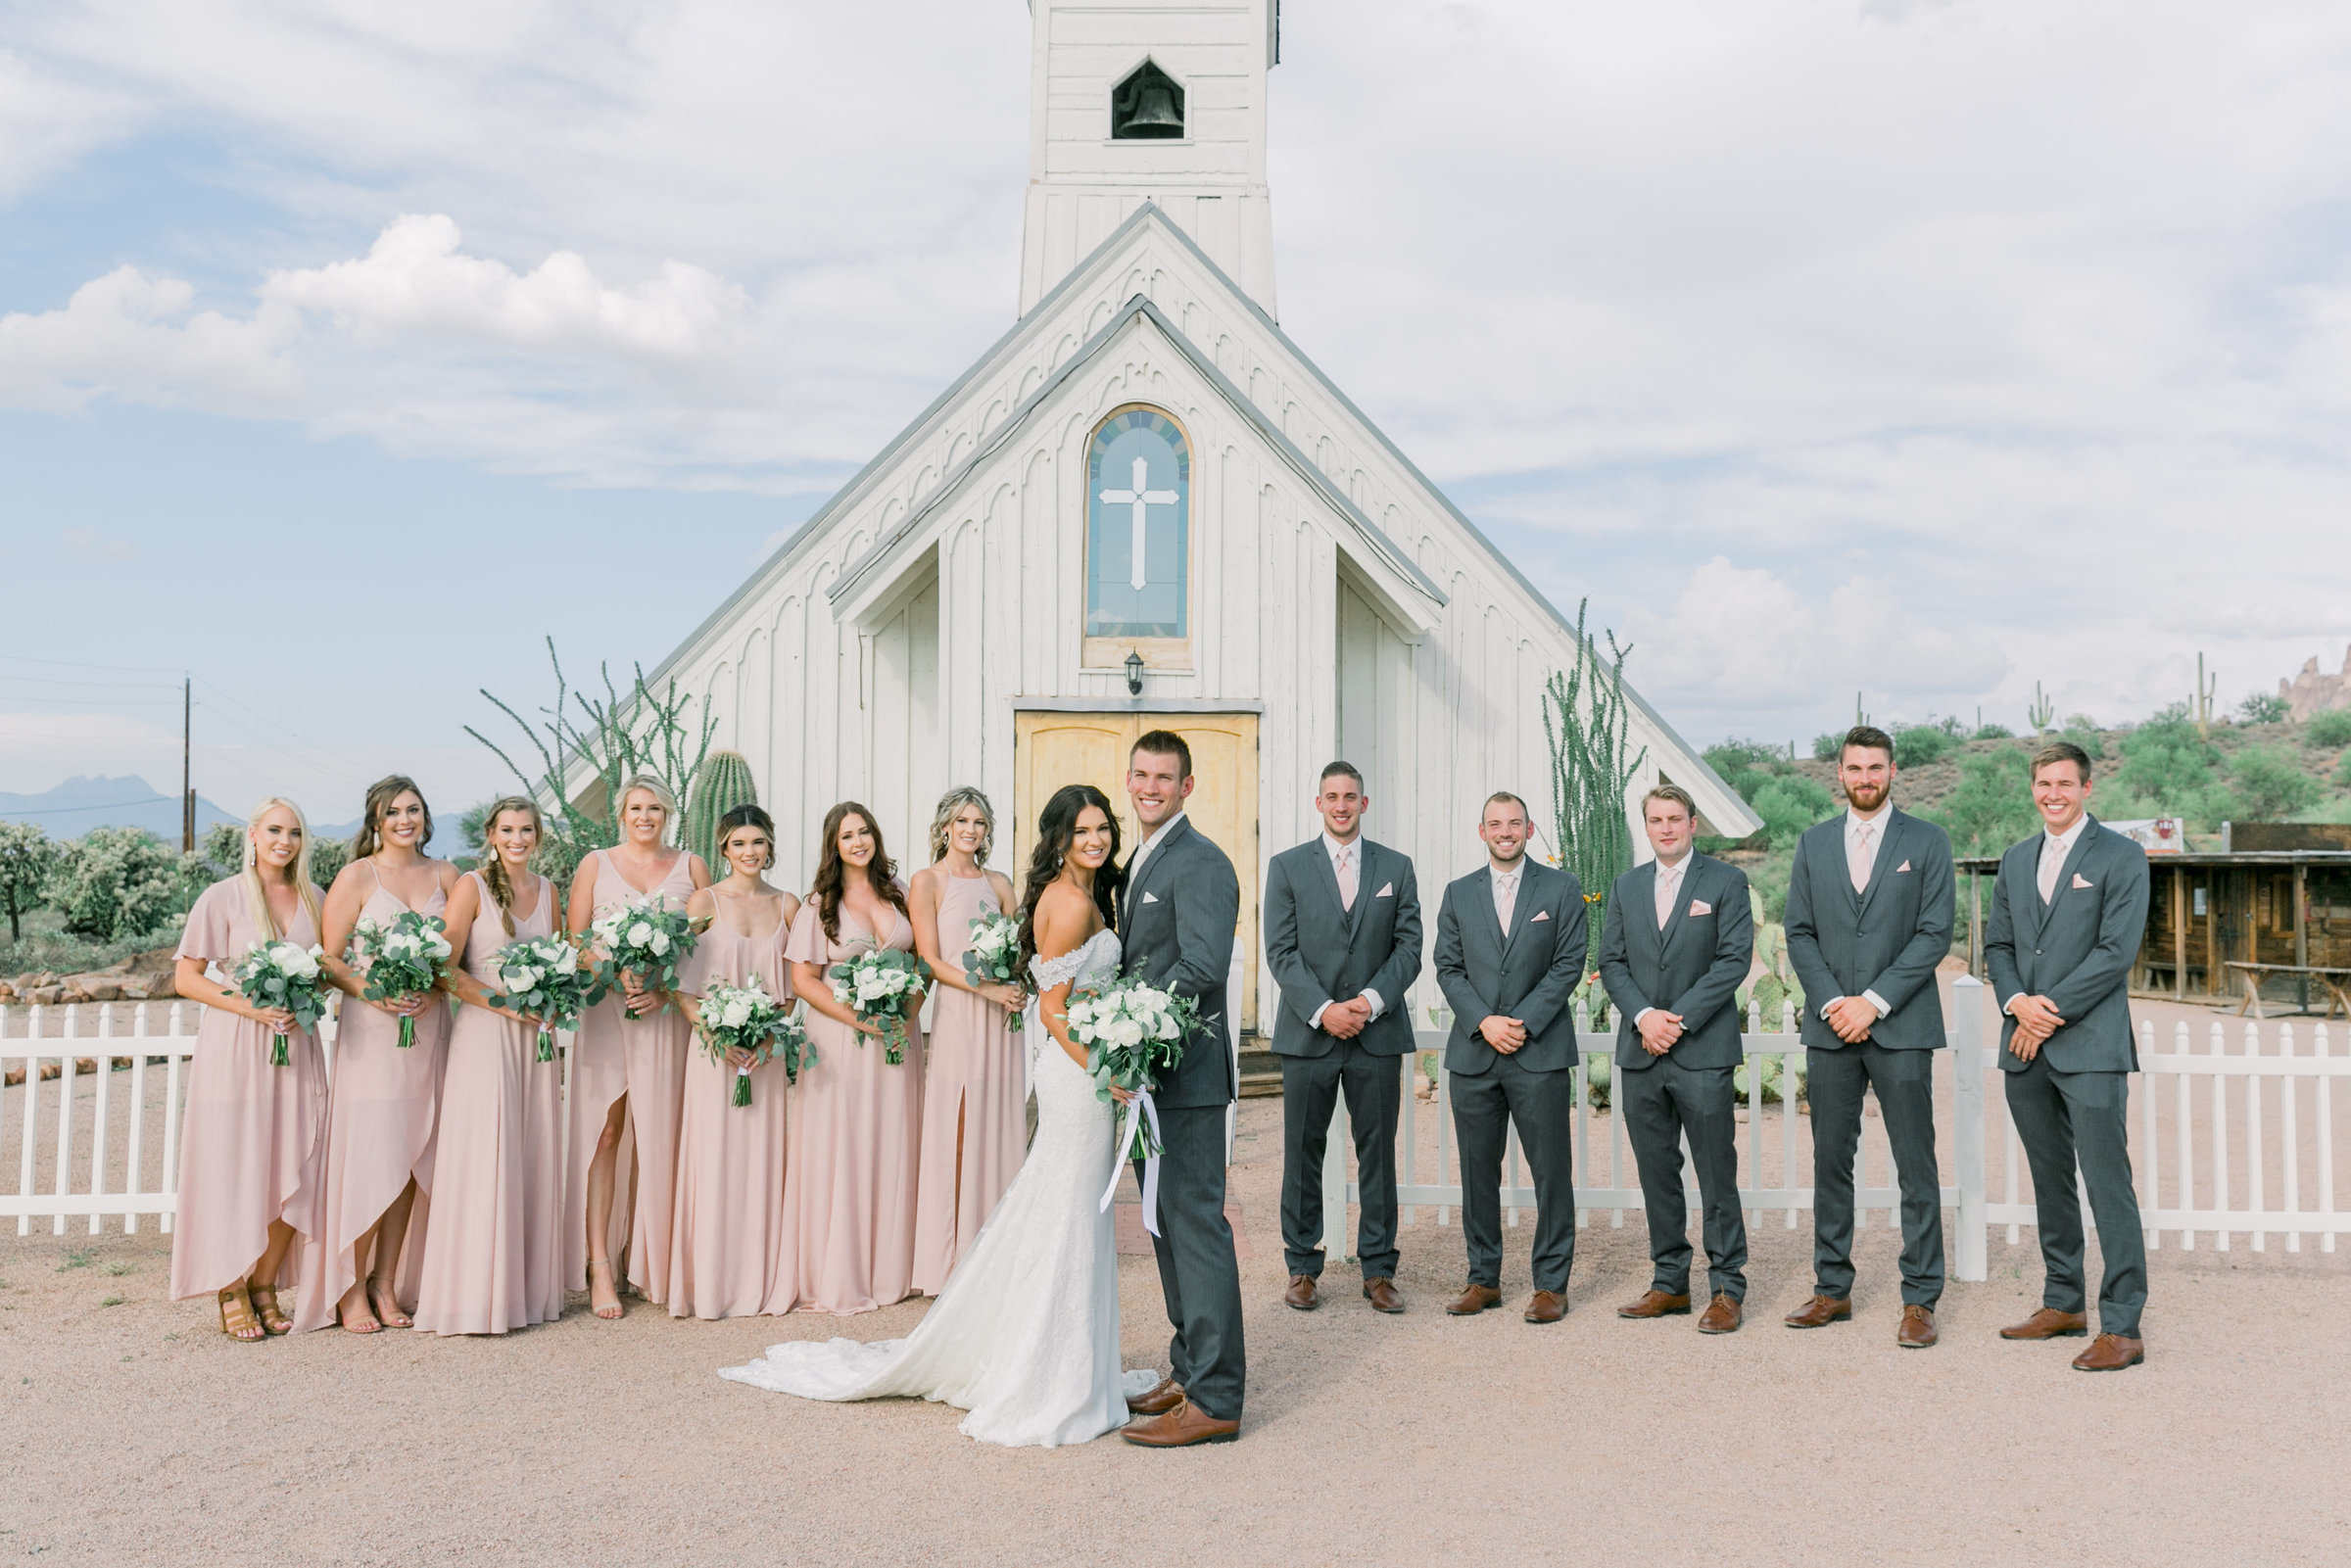 Karlie Colleen Photography - The Paseo Desert Wedding - Jackie & Ryan-62